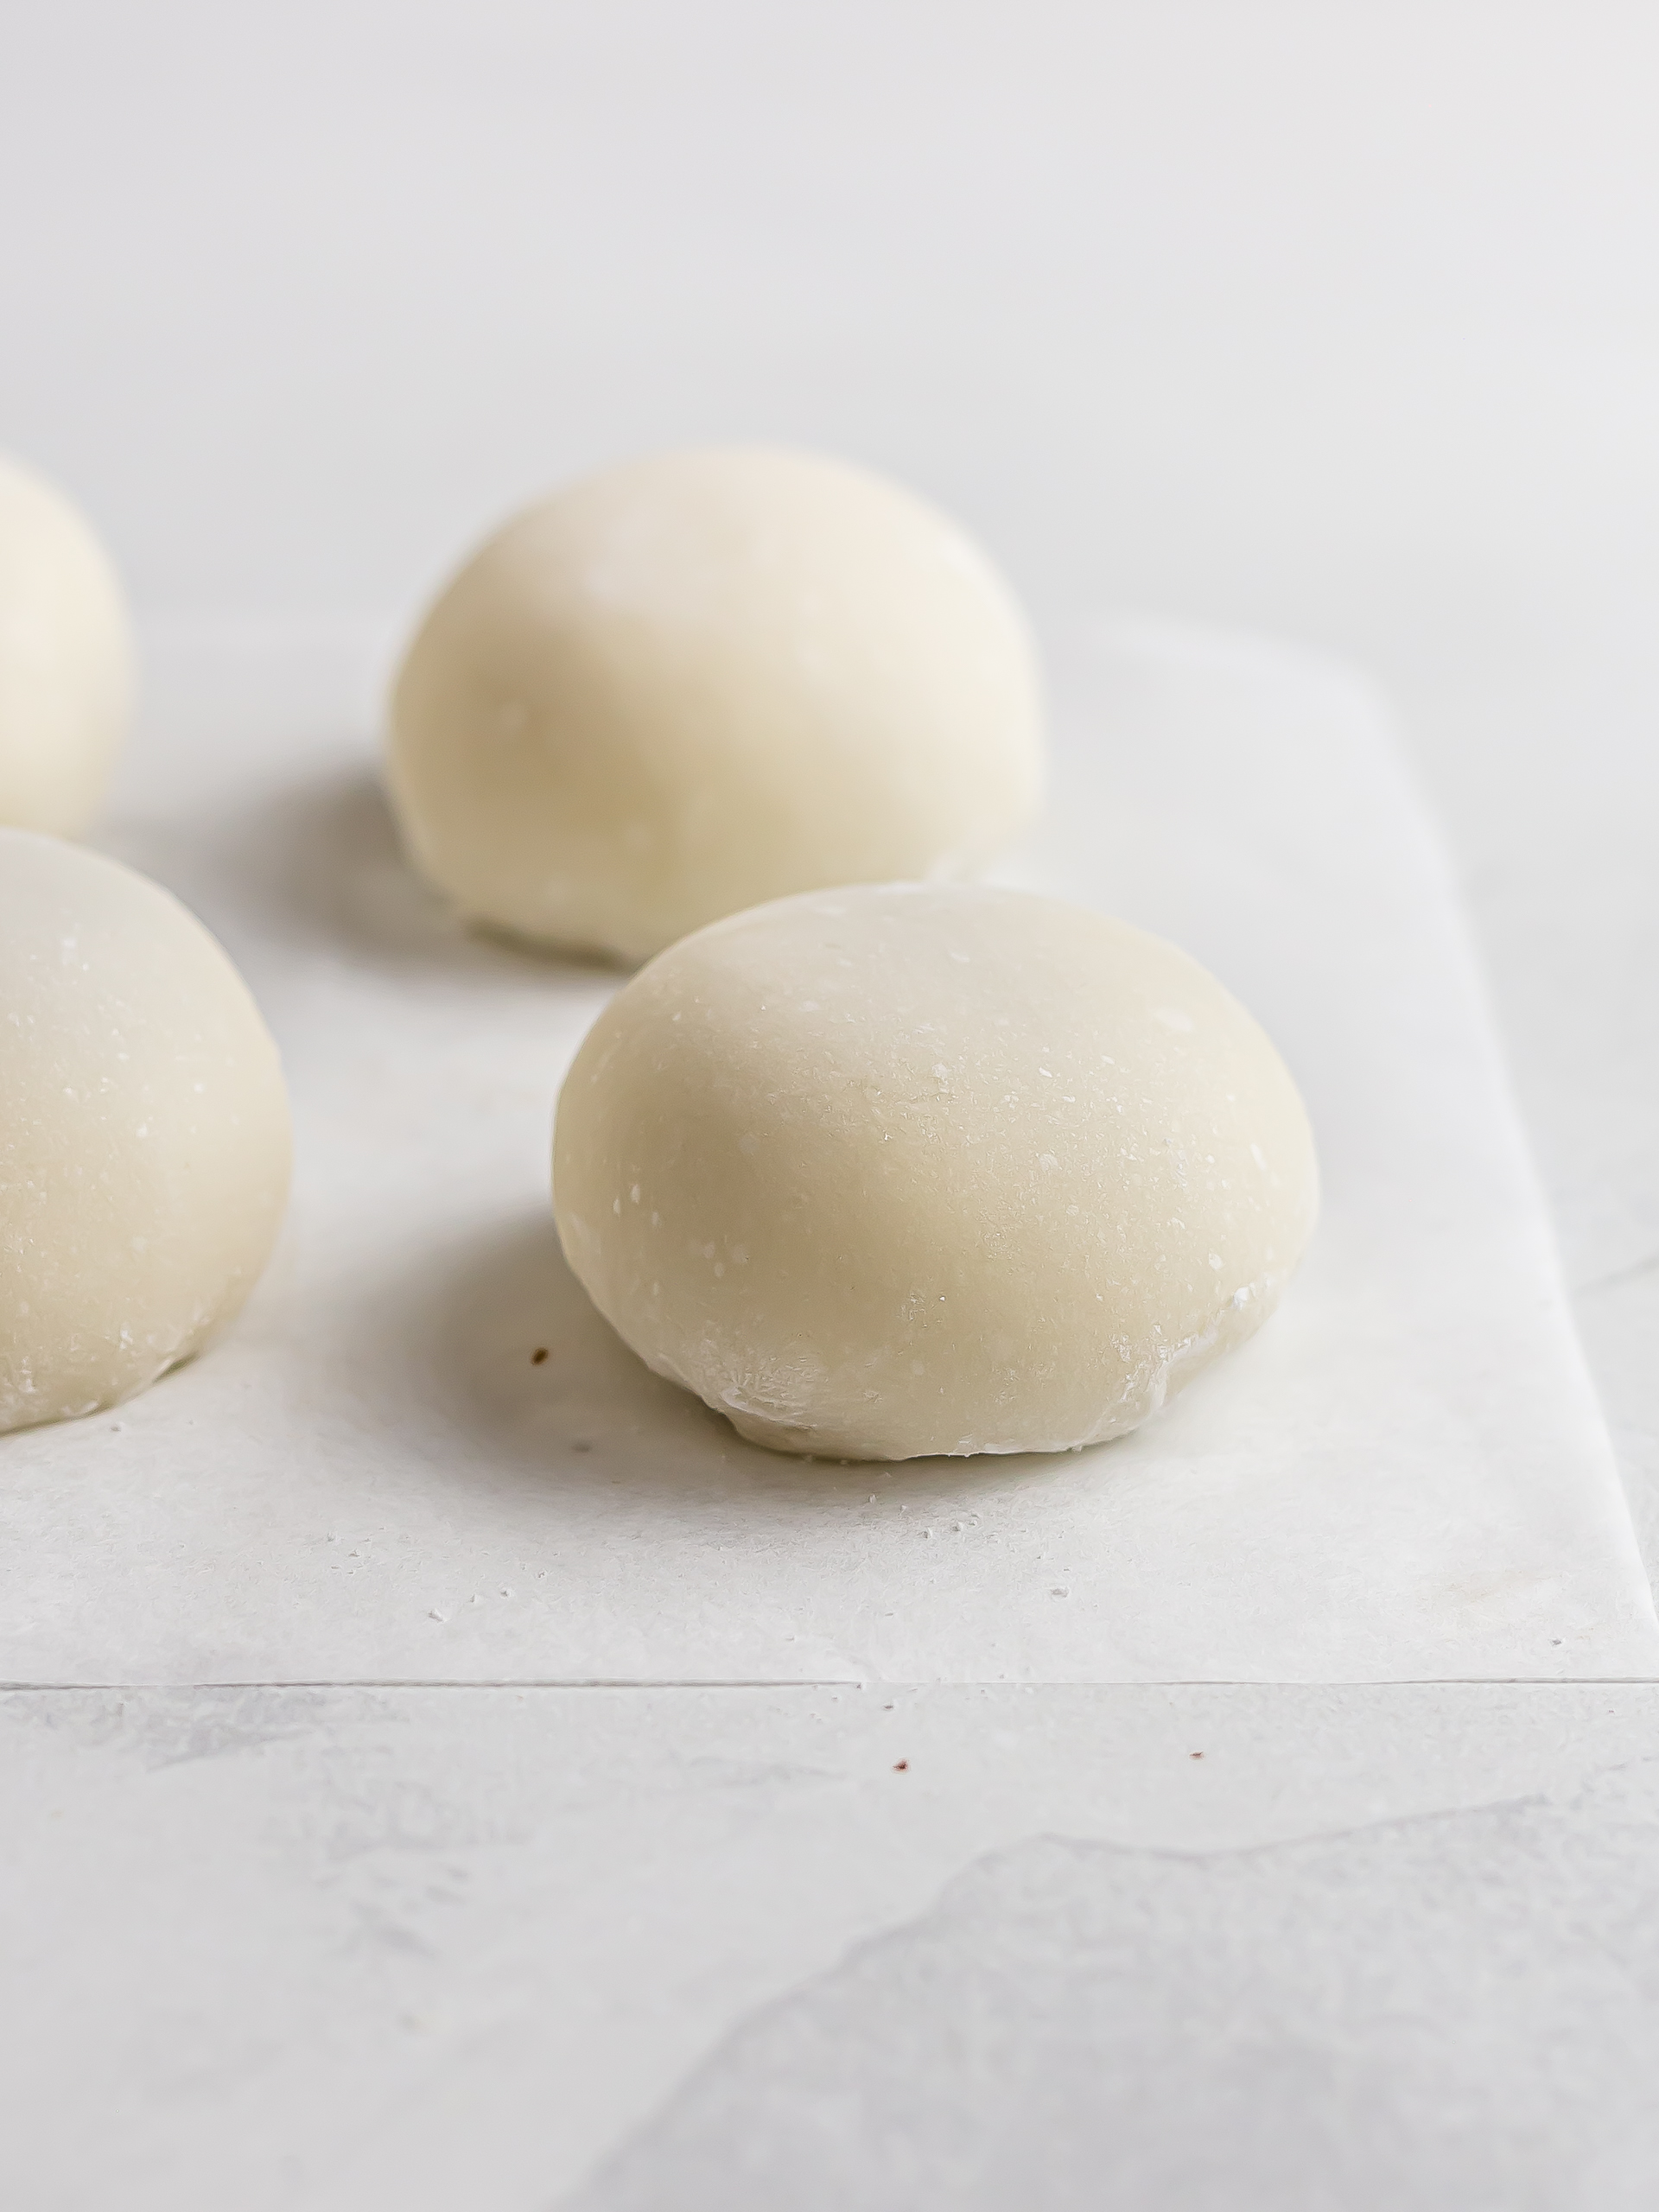 shaped mochi balls on a sheet of baking paper